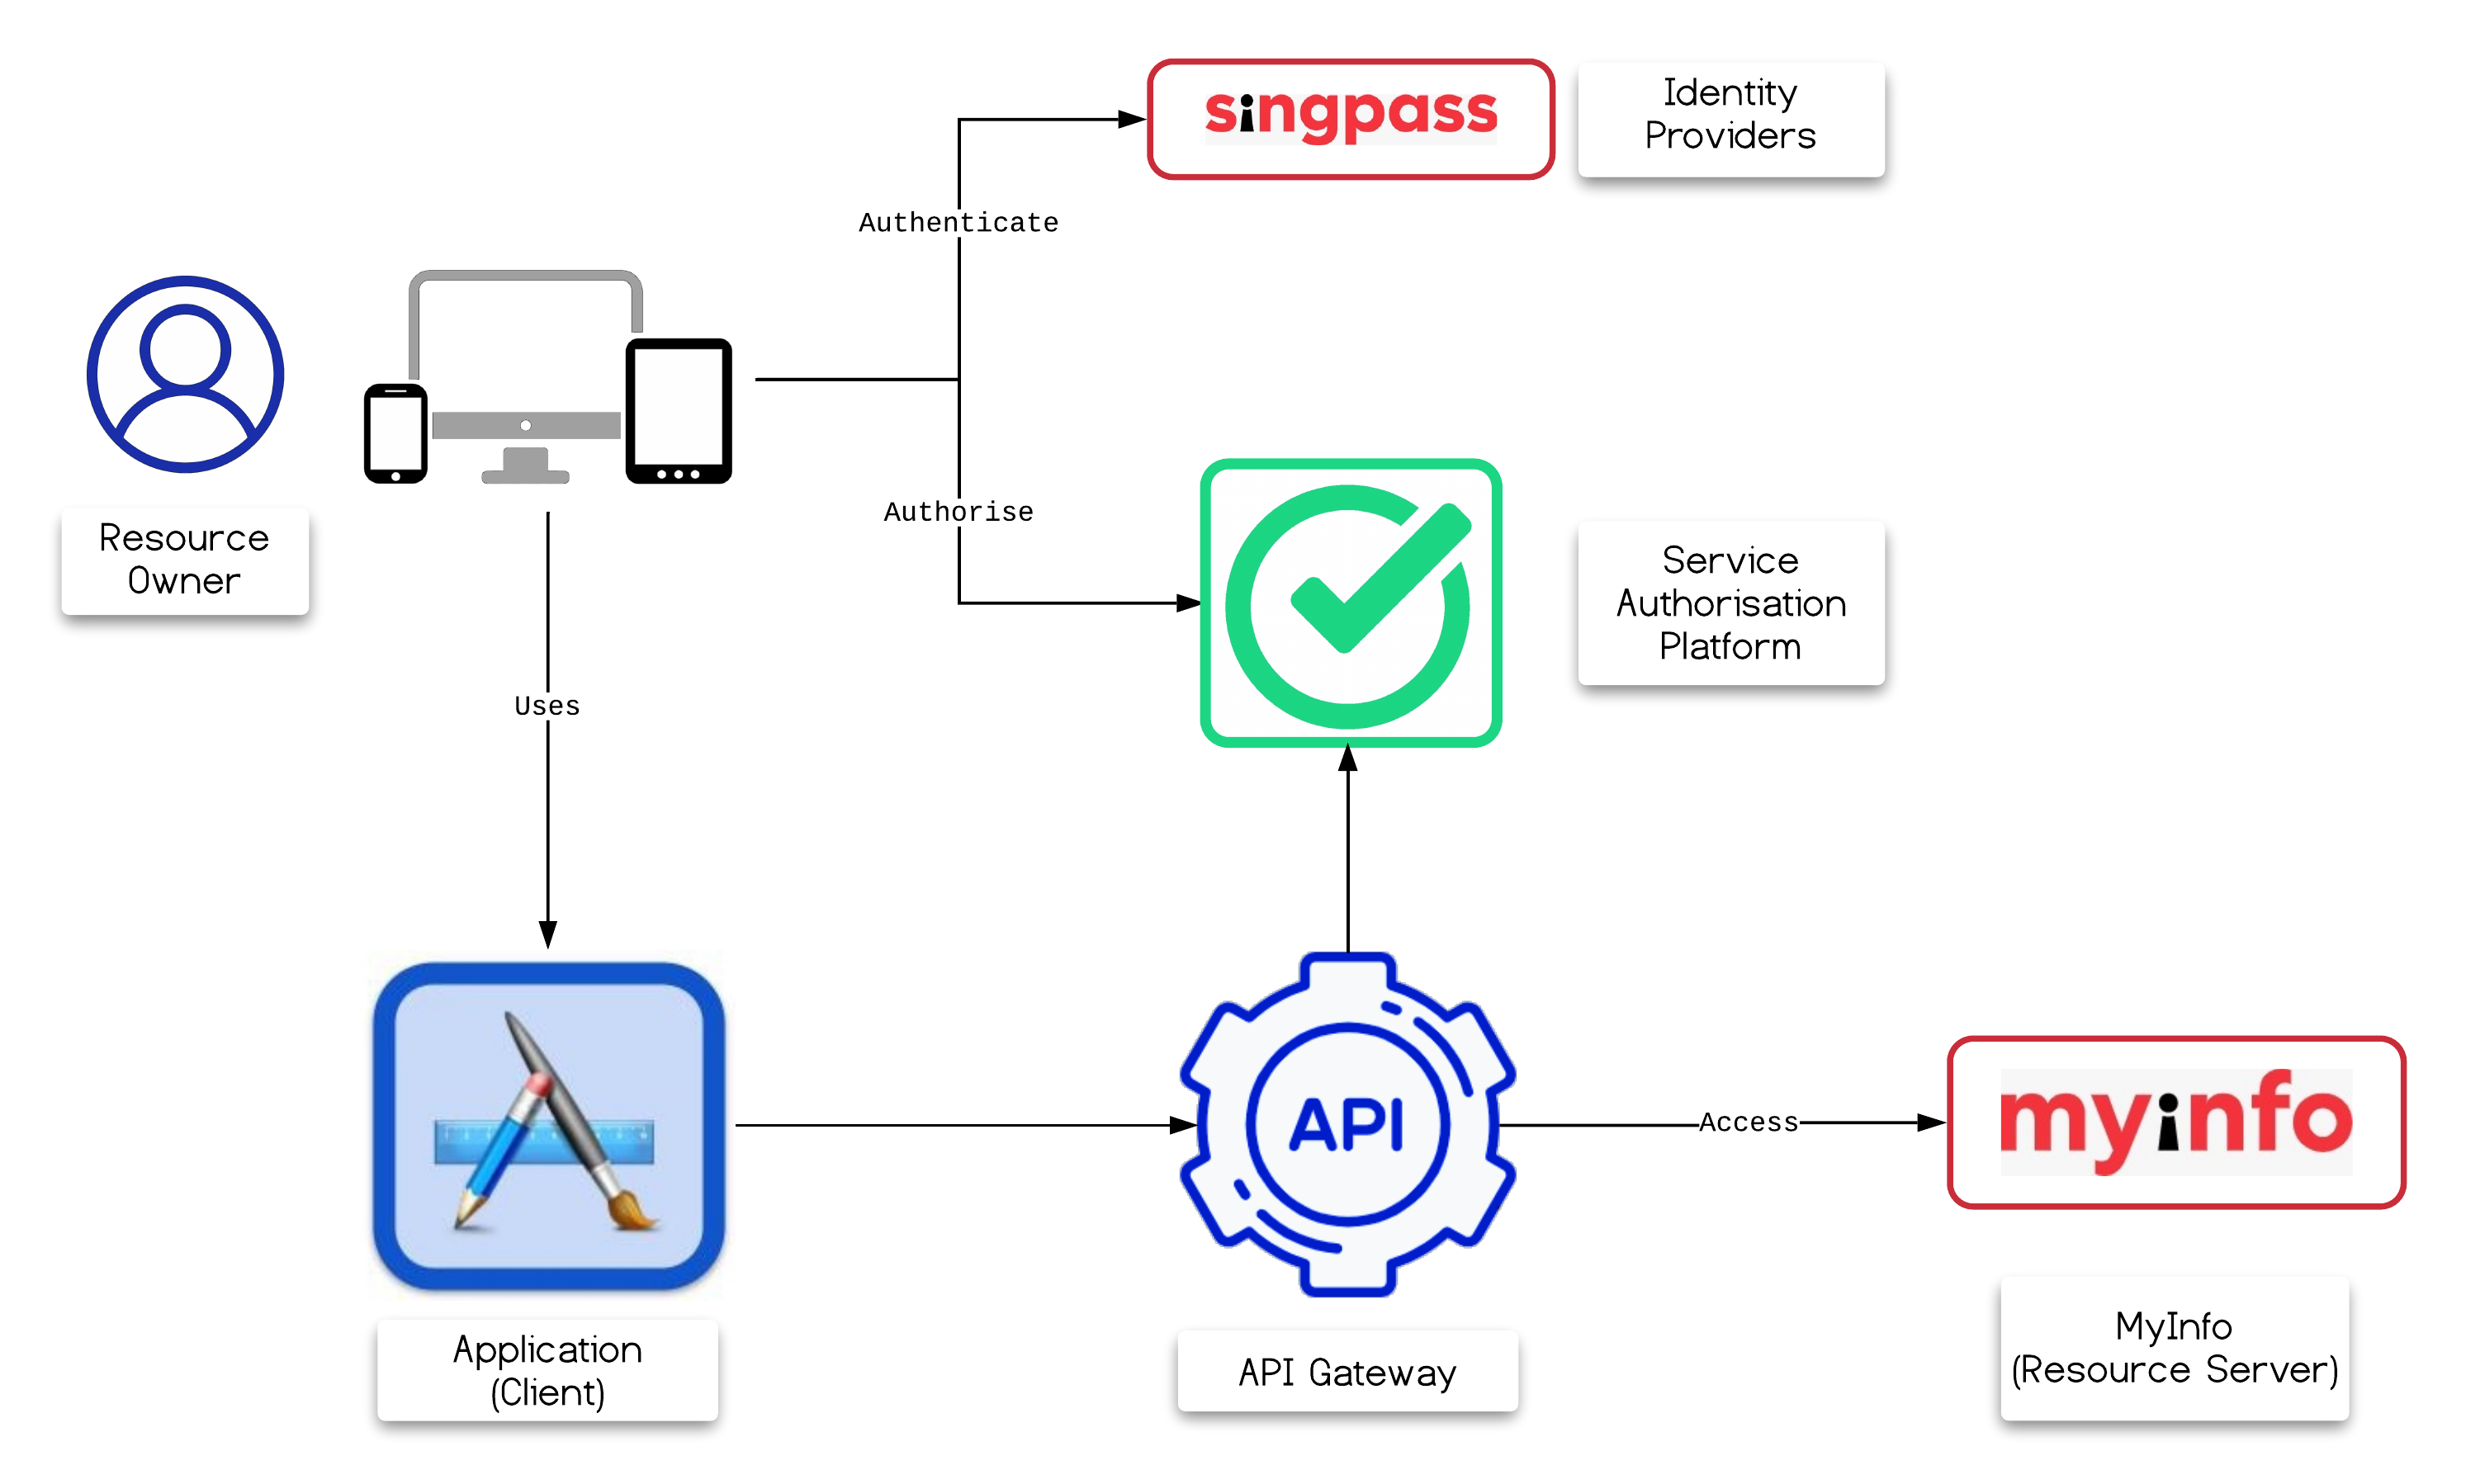 Overview of MyInfo/ Singpass Integration  
Ref: [Singpass API](https://api.singpass.gov.sg/library/myinfo/developers/overview)